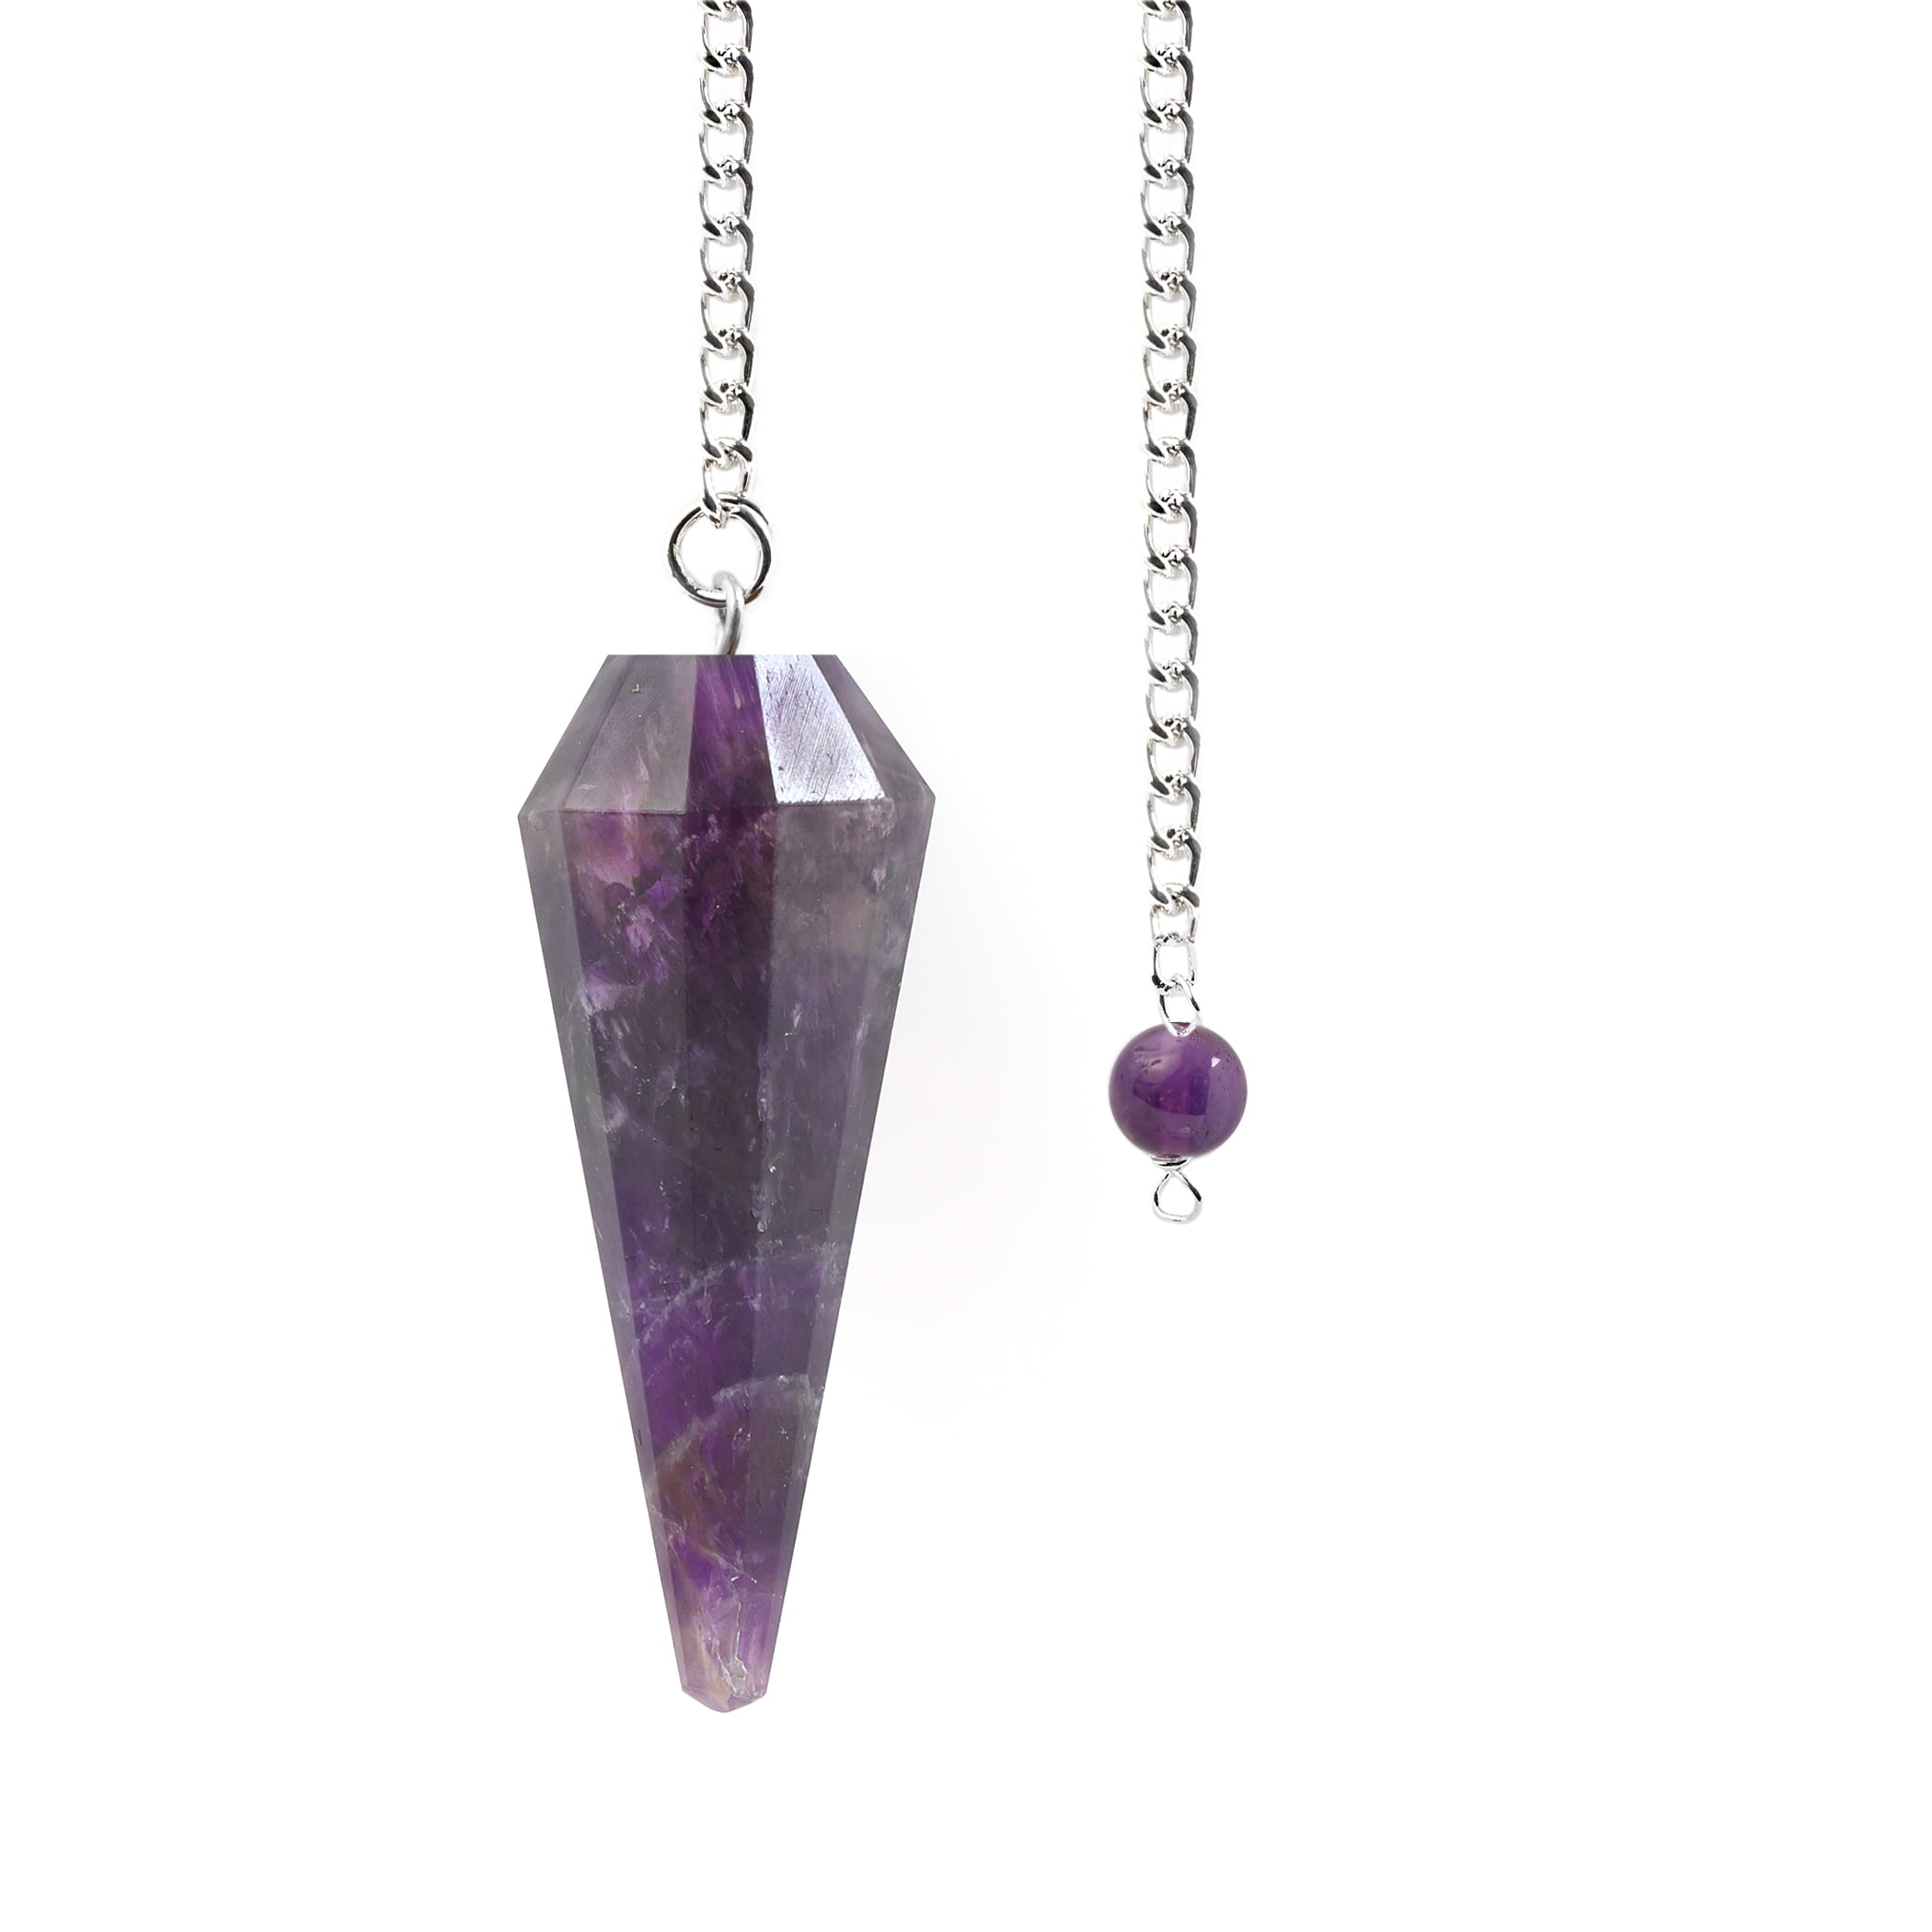 Details about   Natural Clear Quartz Crystal Pendulum Pendant Necklace Chakra Gemstone Healing 